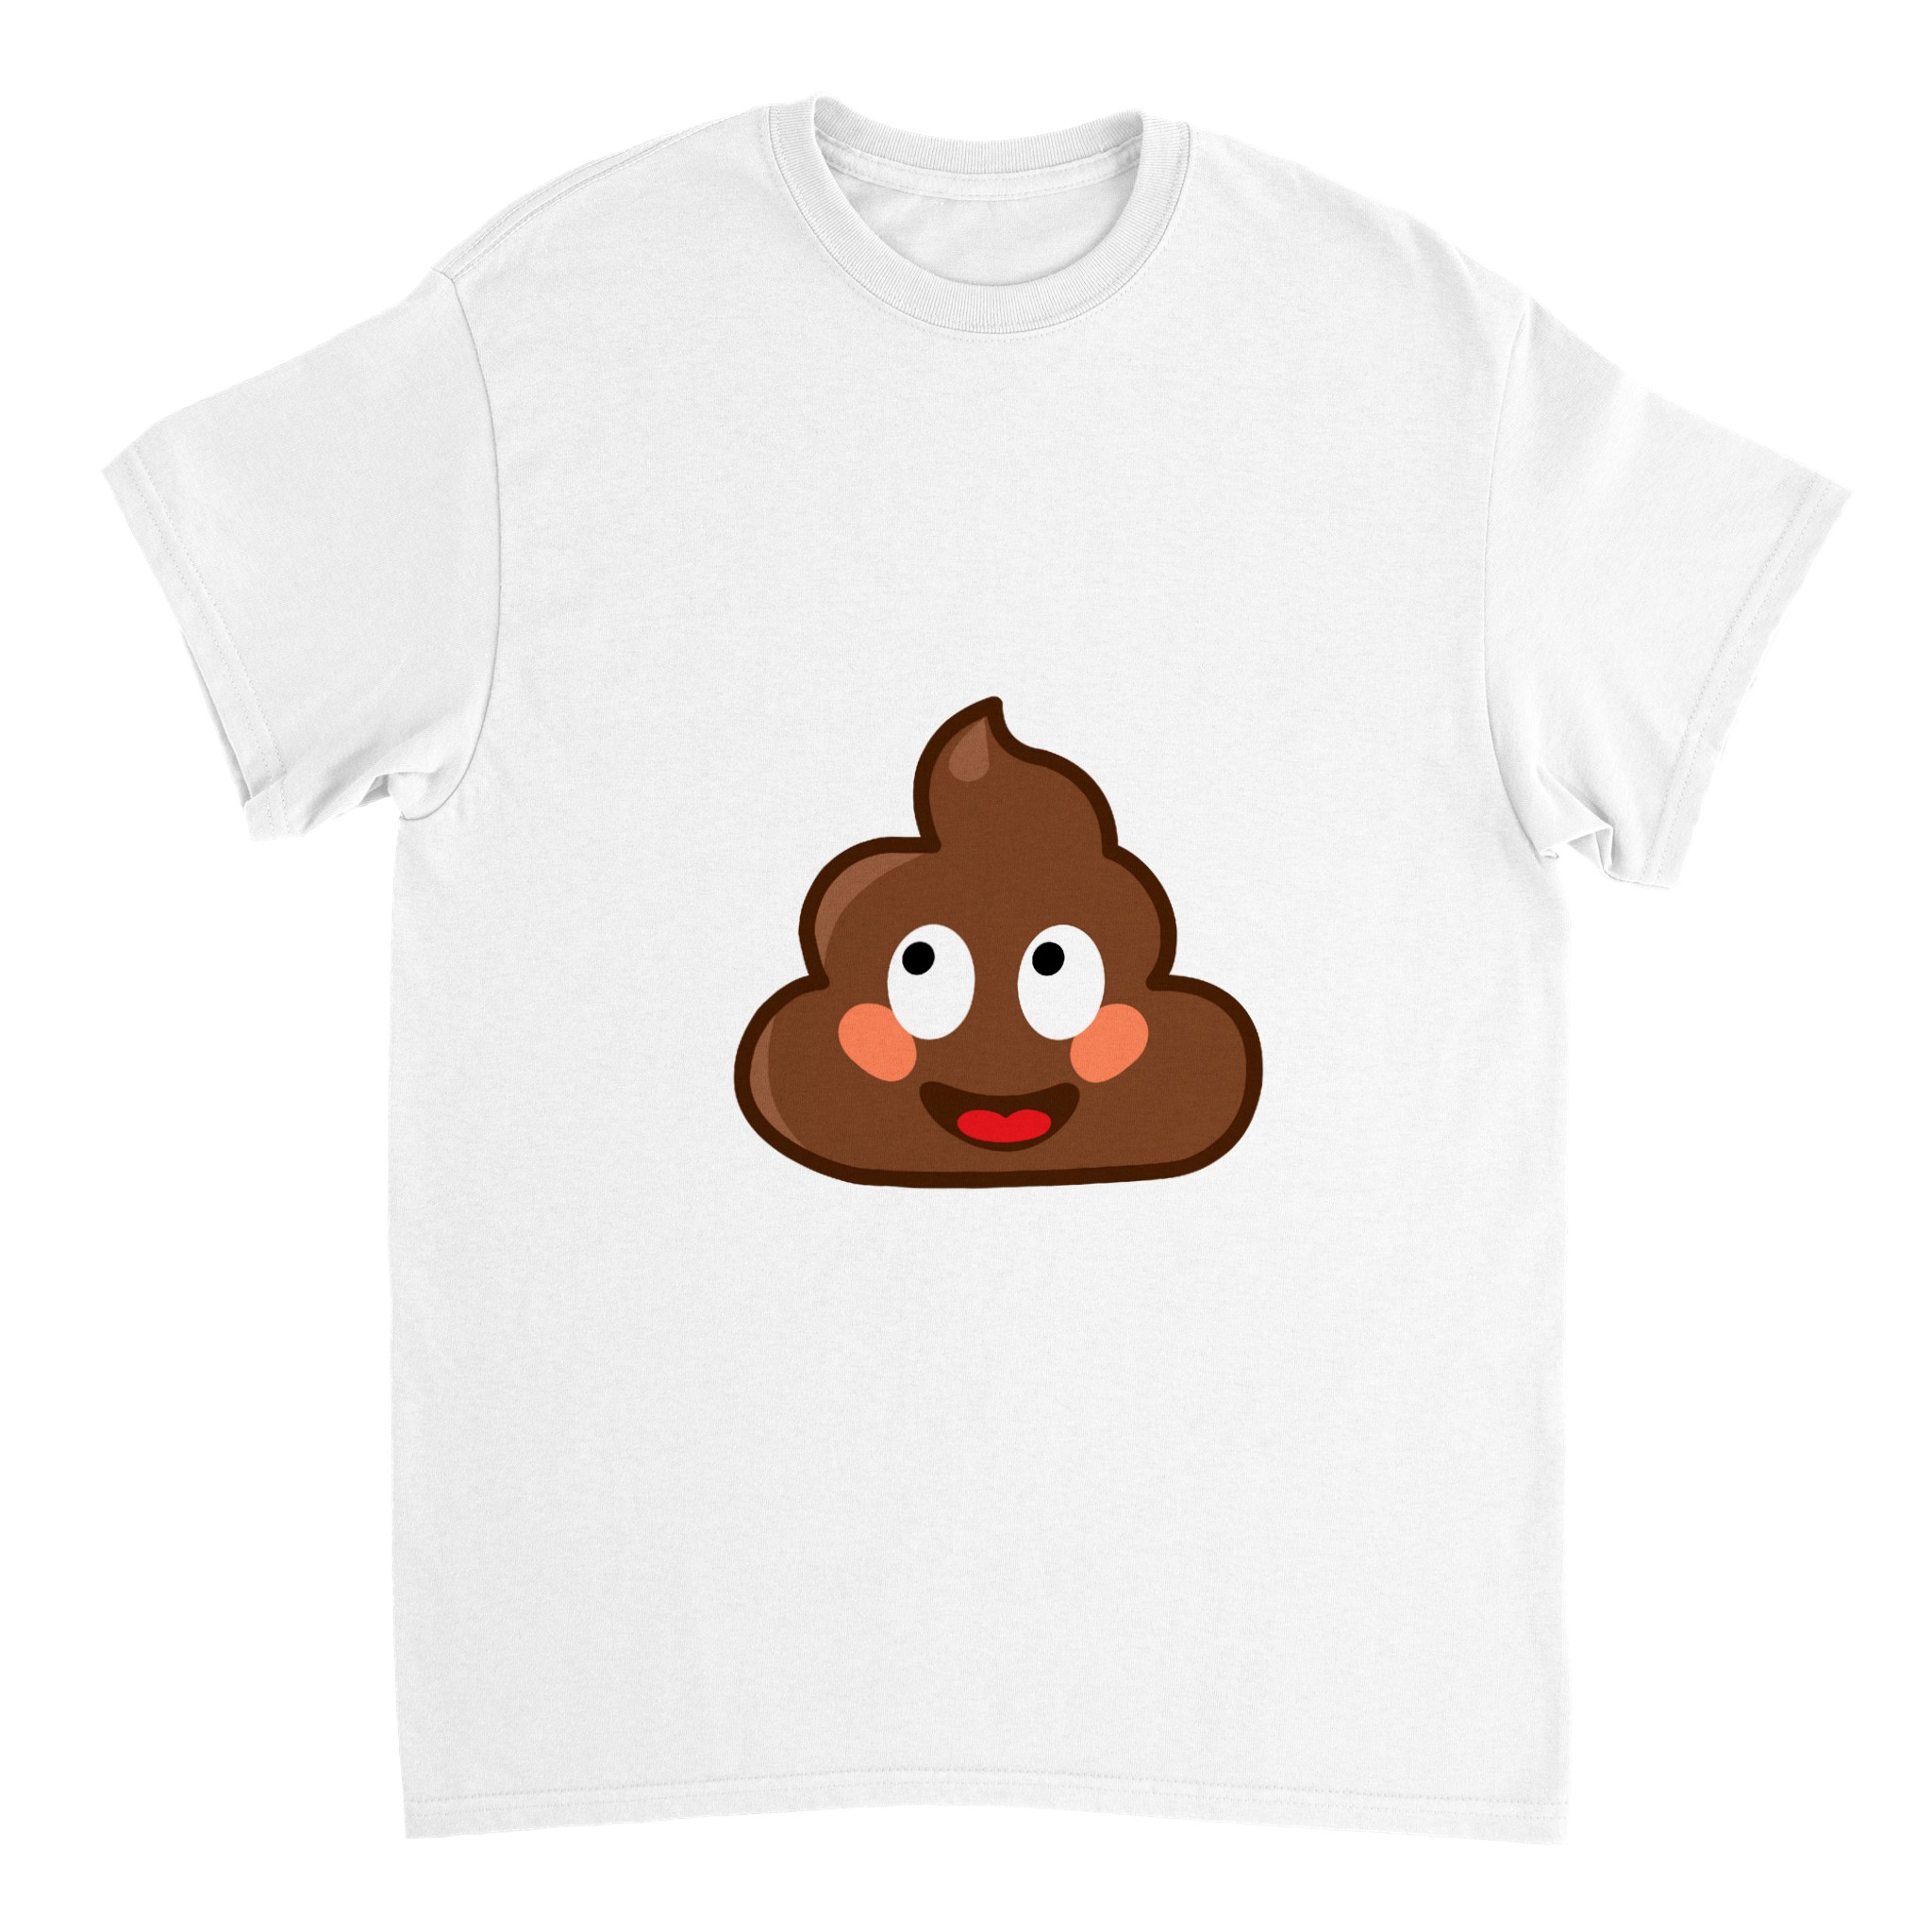 Heavyweight Unisex Crewneck T-shirt - Poo emoji